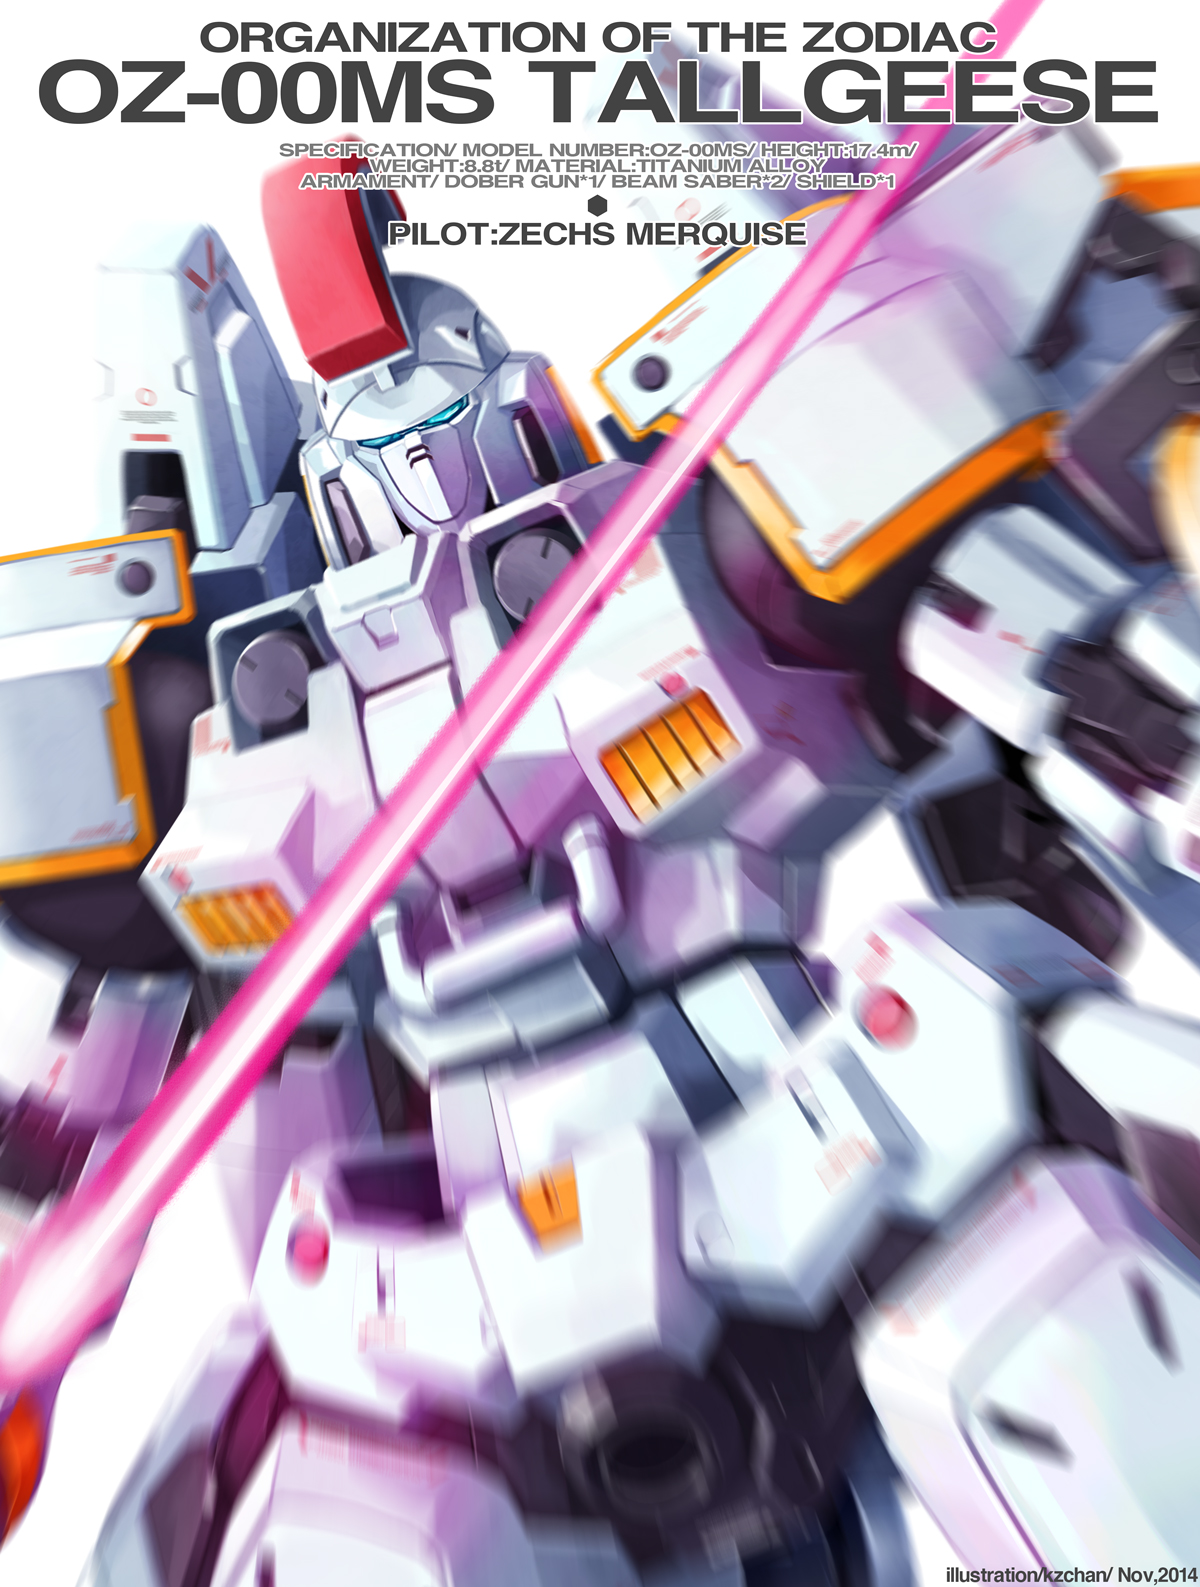 Tallgeese Anime Mechs Mobile Suit Gundam Wing Super Robot Taisen Mobile Suit Artwork Digital Art Fan 1200x1587